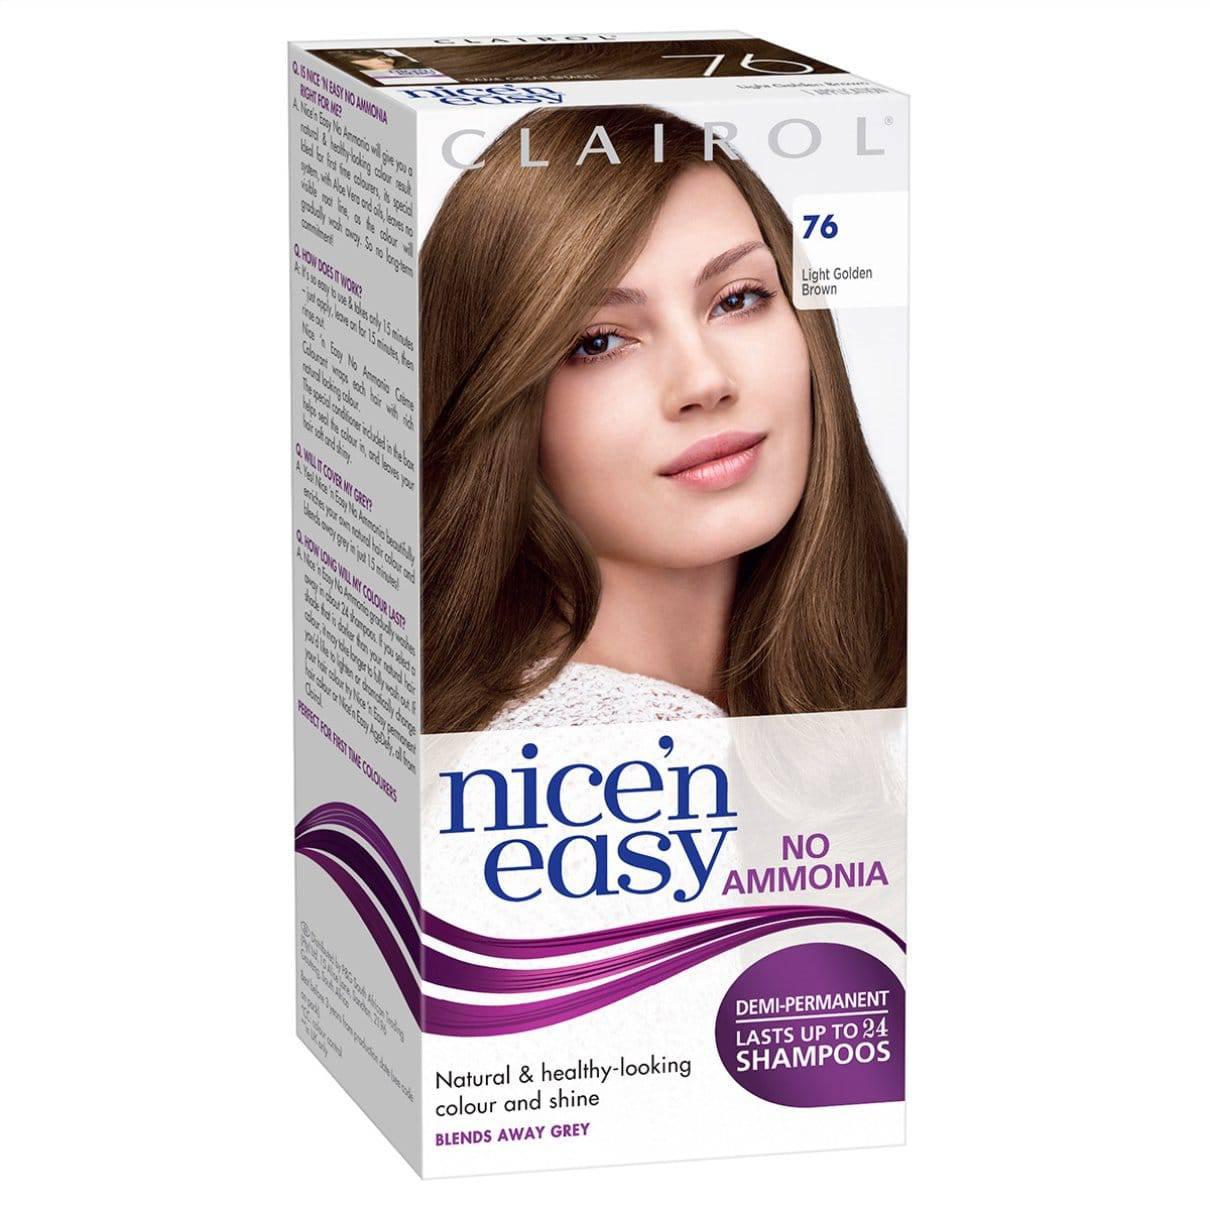 Clairol Nice N Easy No Ammonia Semi-Permanent Hair Dye - 76 Light Golden Brown - Healthxpress.ie